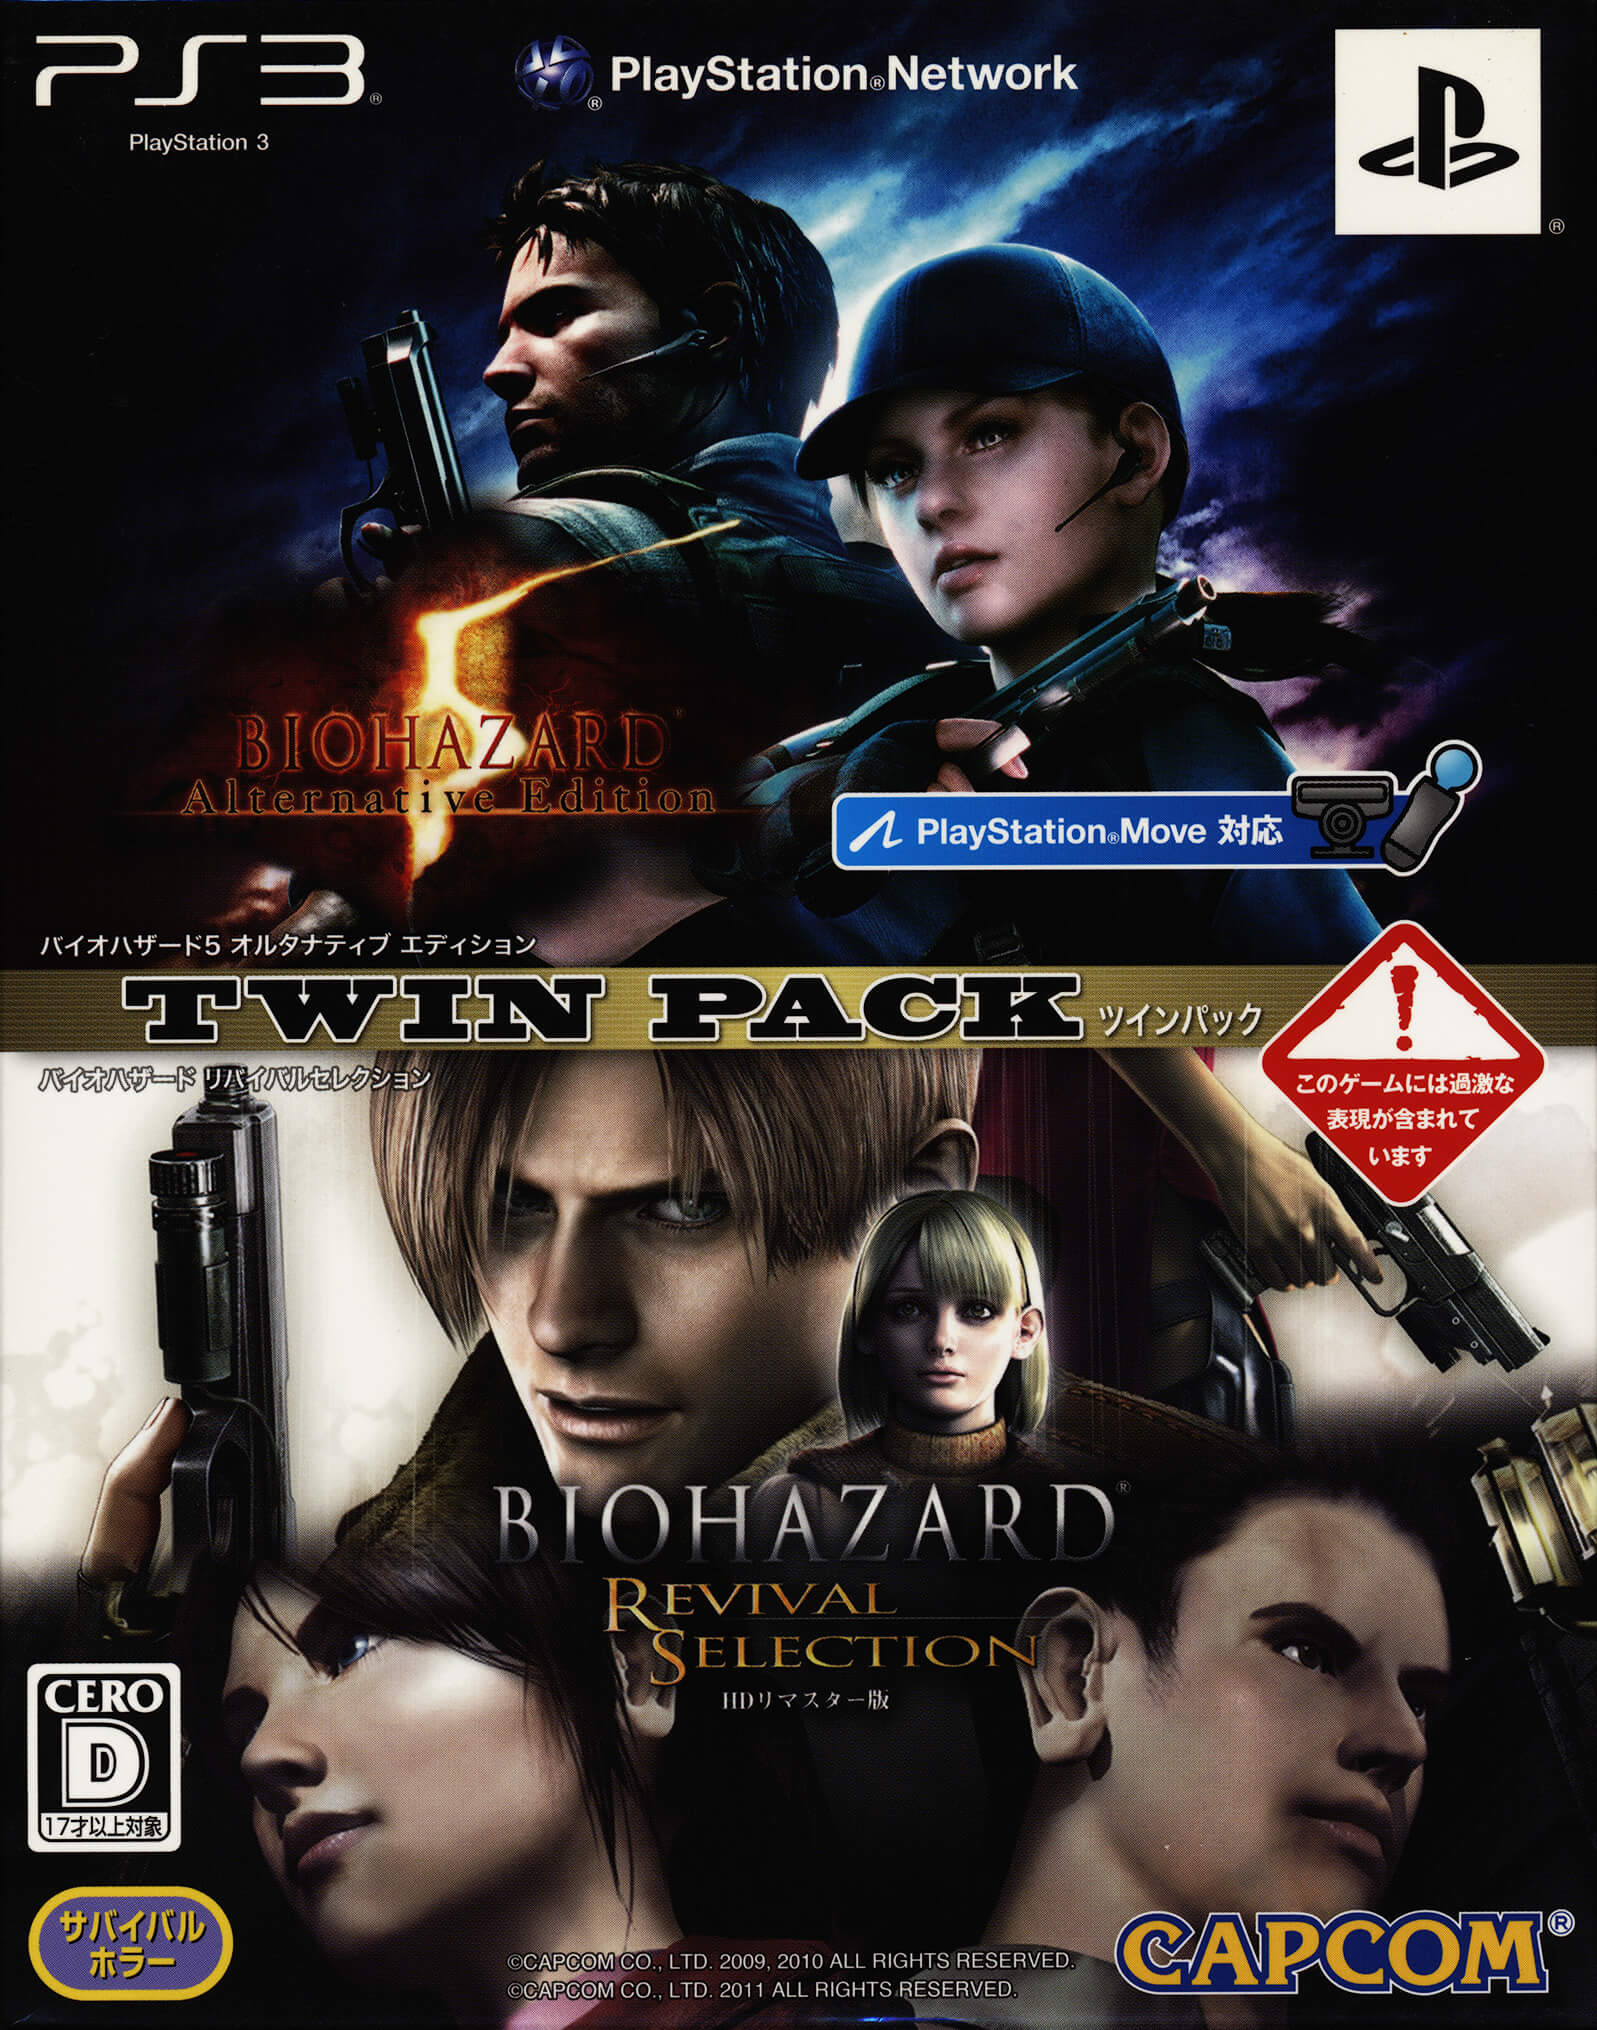 Biohazard 5: Alternative Edition / Biohazard: Revival Selection: Twin Pack